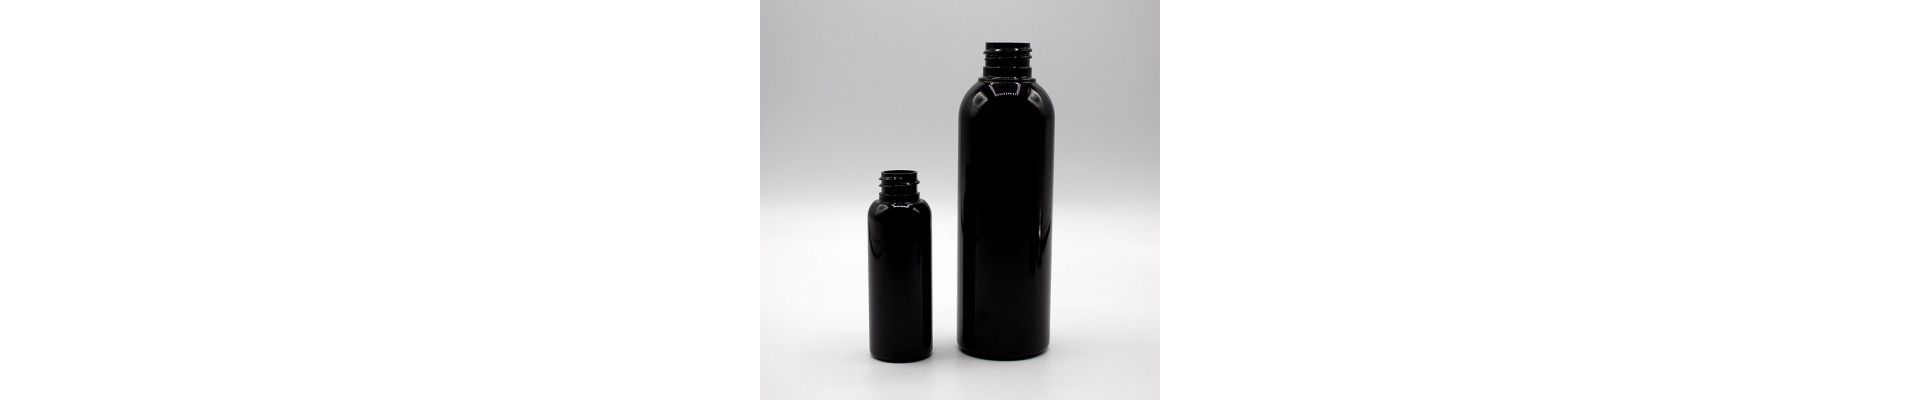 Black Plastic Bottles | The Soap Kitchen™